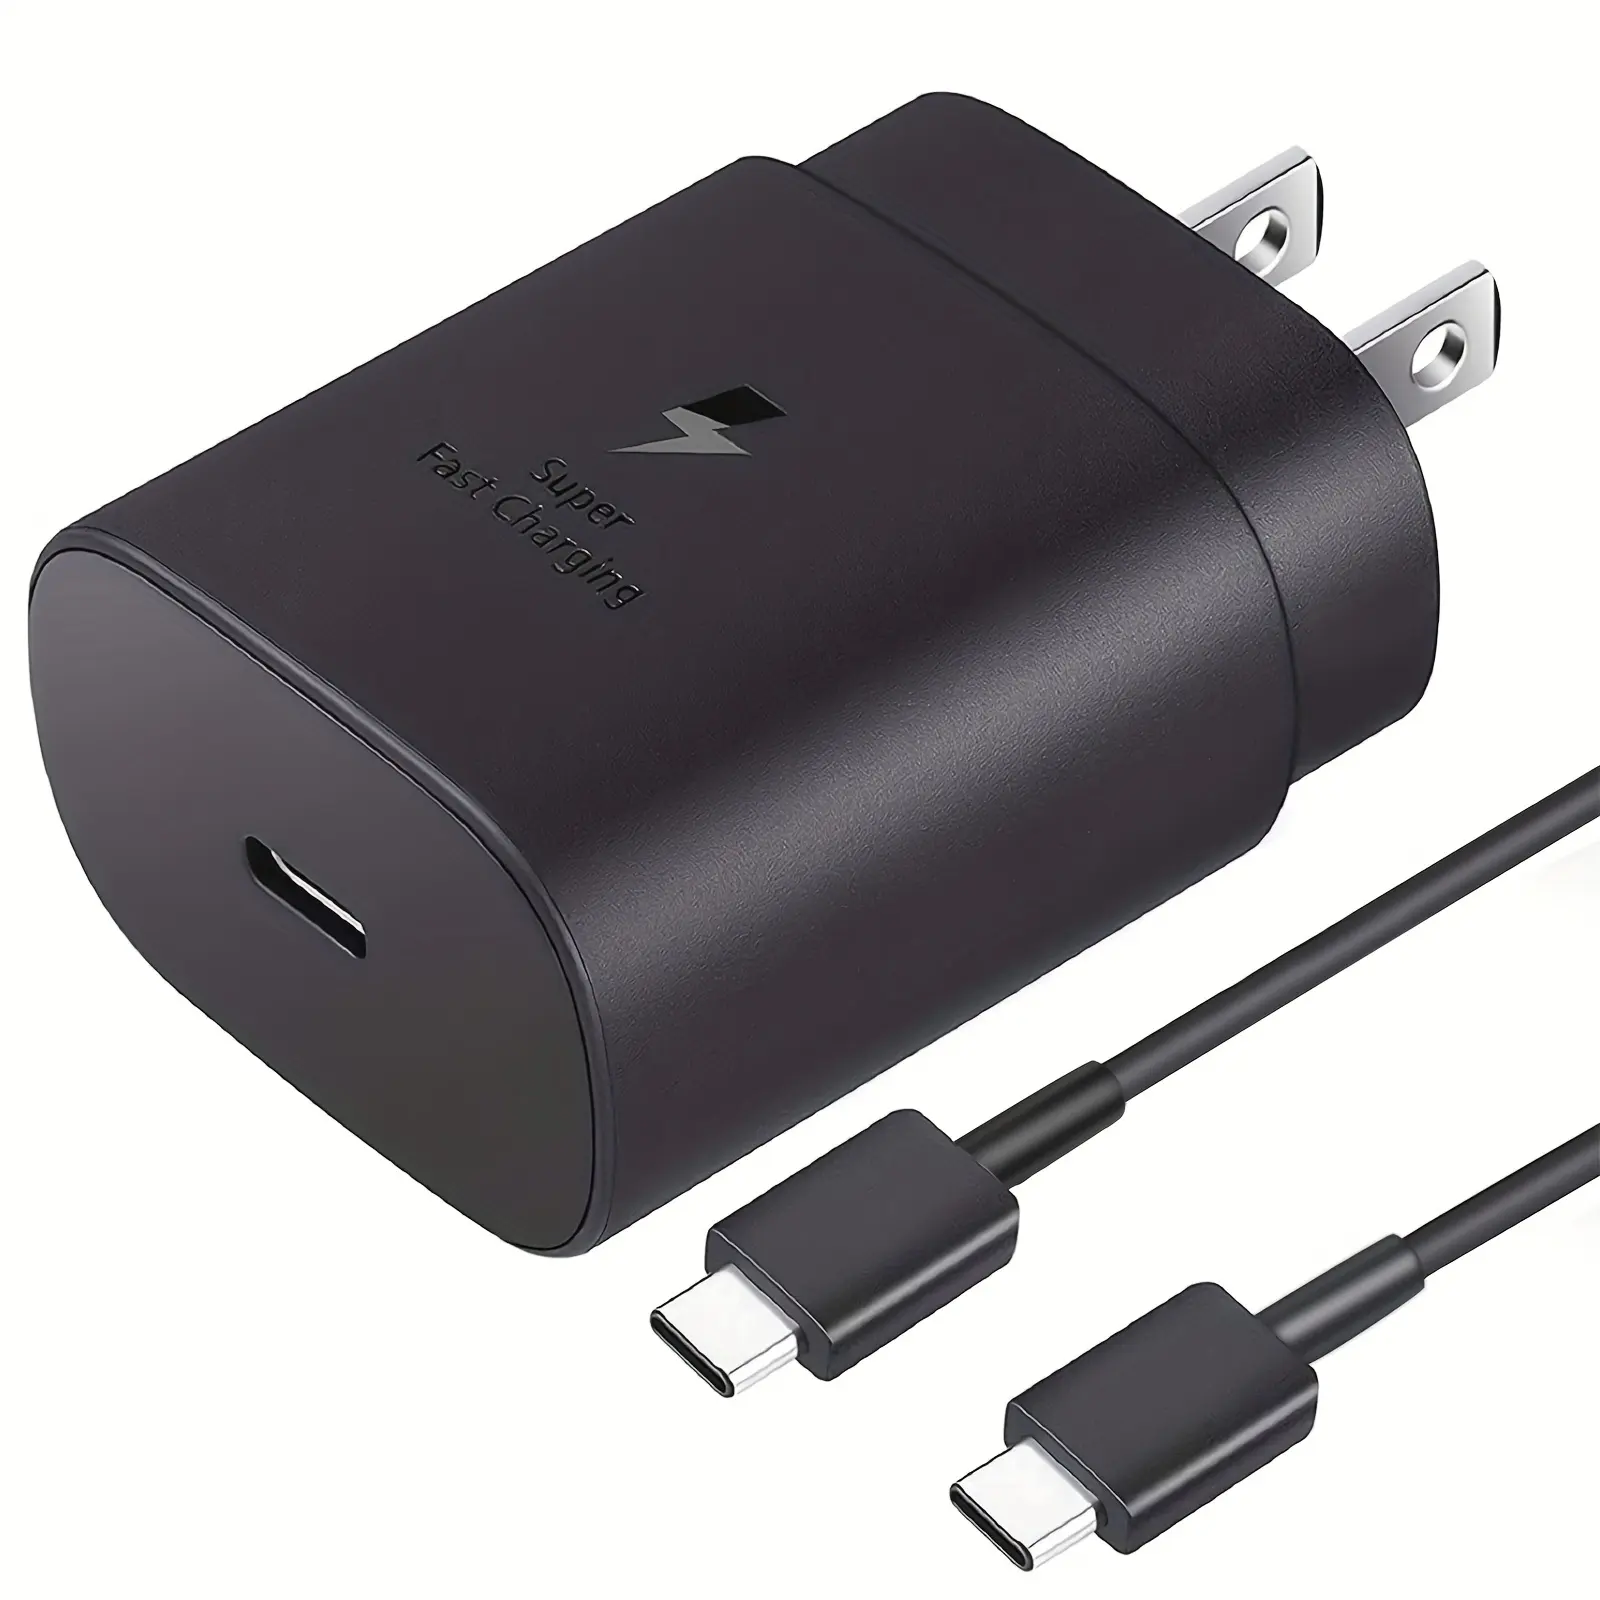 Kabel adaptor pengisi daya dinding, Portabel 25w 45w Usb Tipe c pengisian cepat blok steker ponsel untuk Iphone 15 Pro Max Samsung